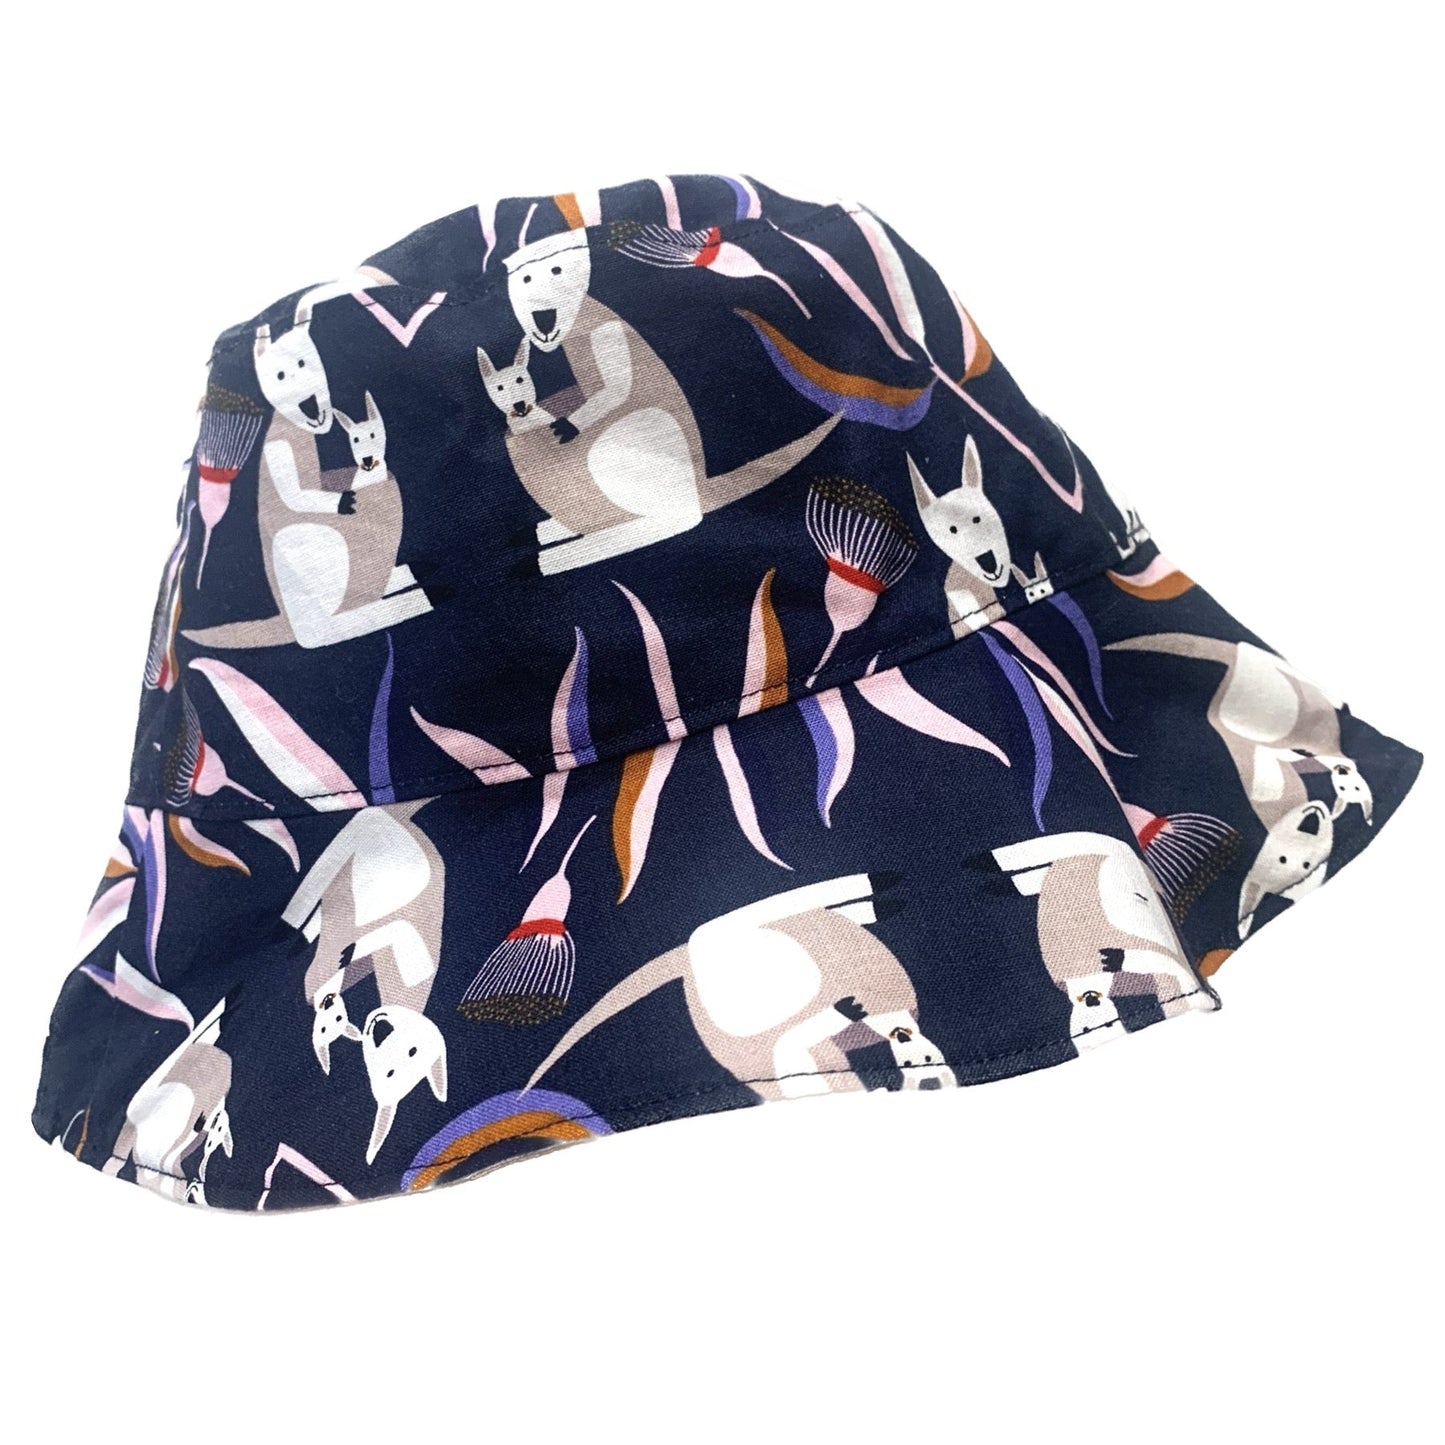 Teacups n Quilts - Navy Kangaroos Fabric Hat - Kids Size Large